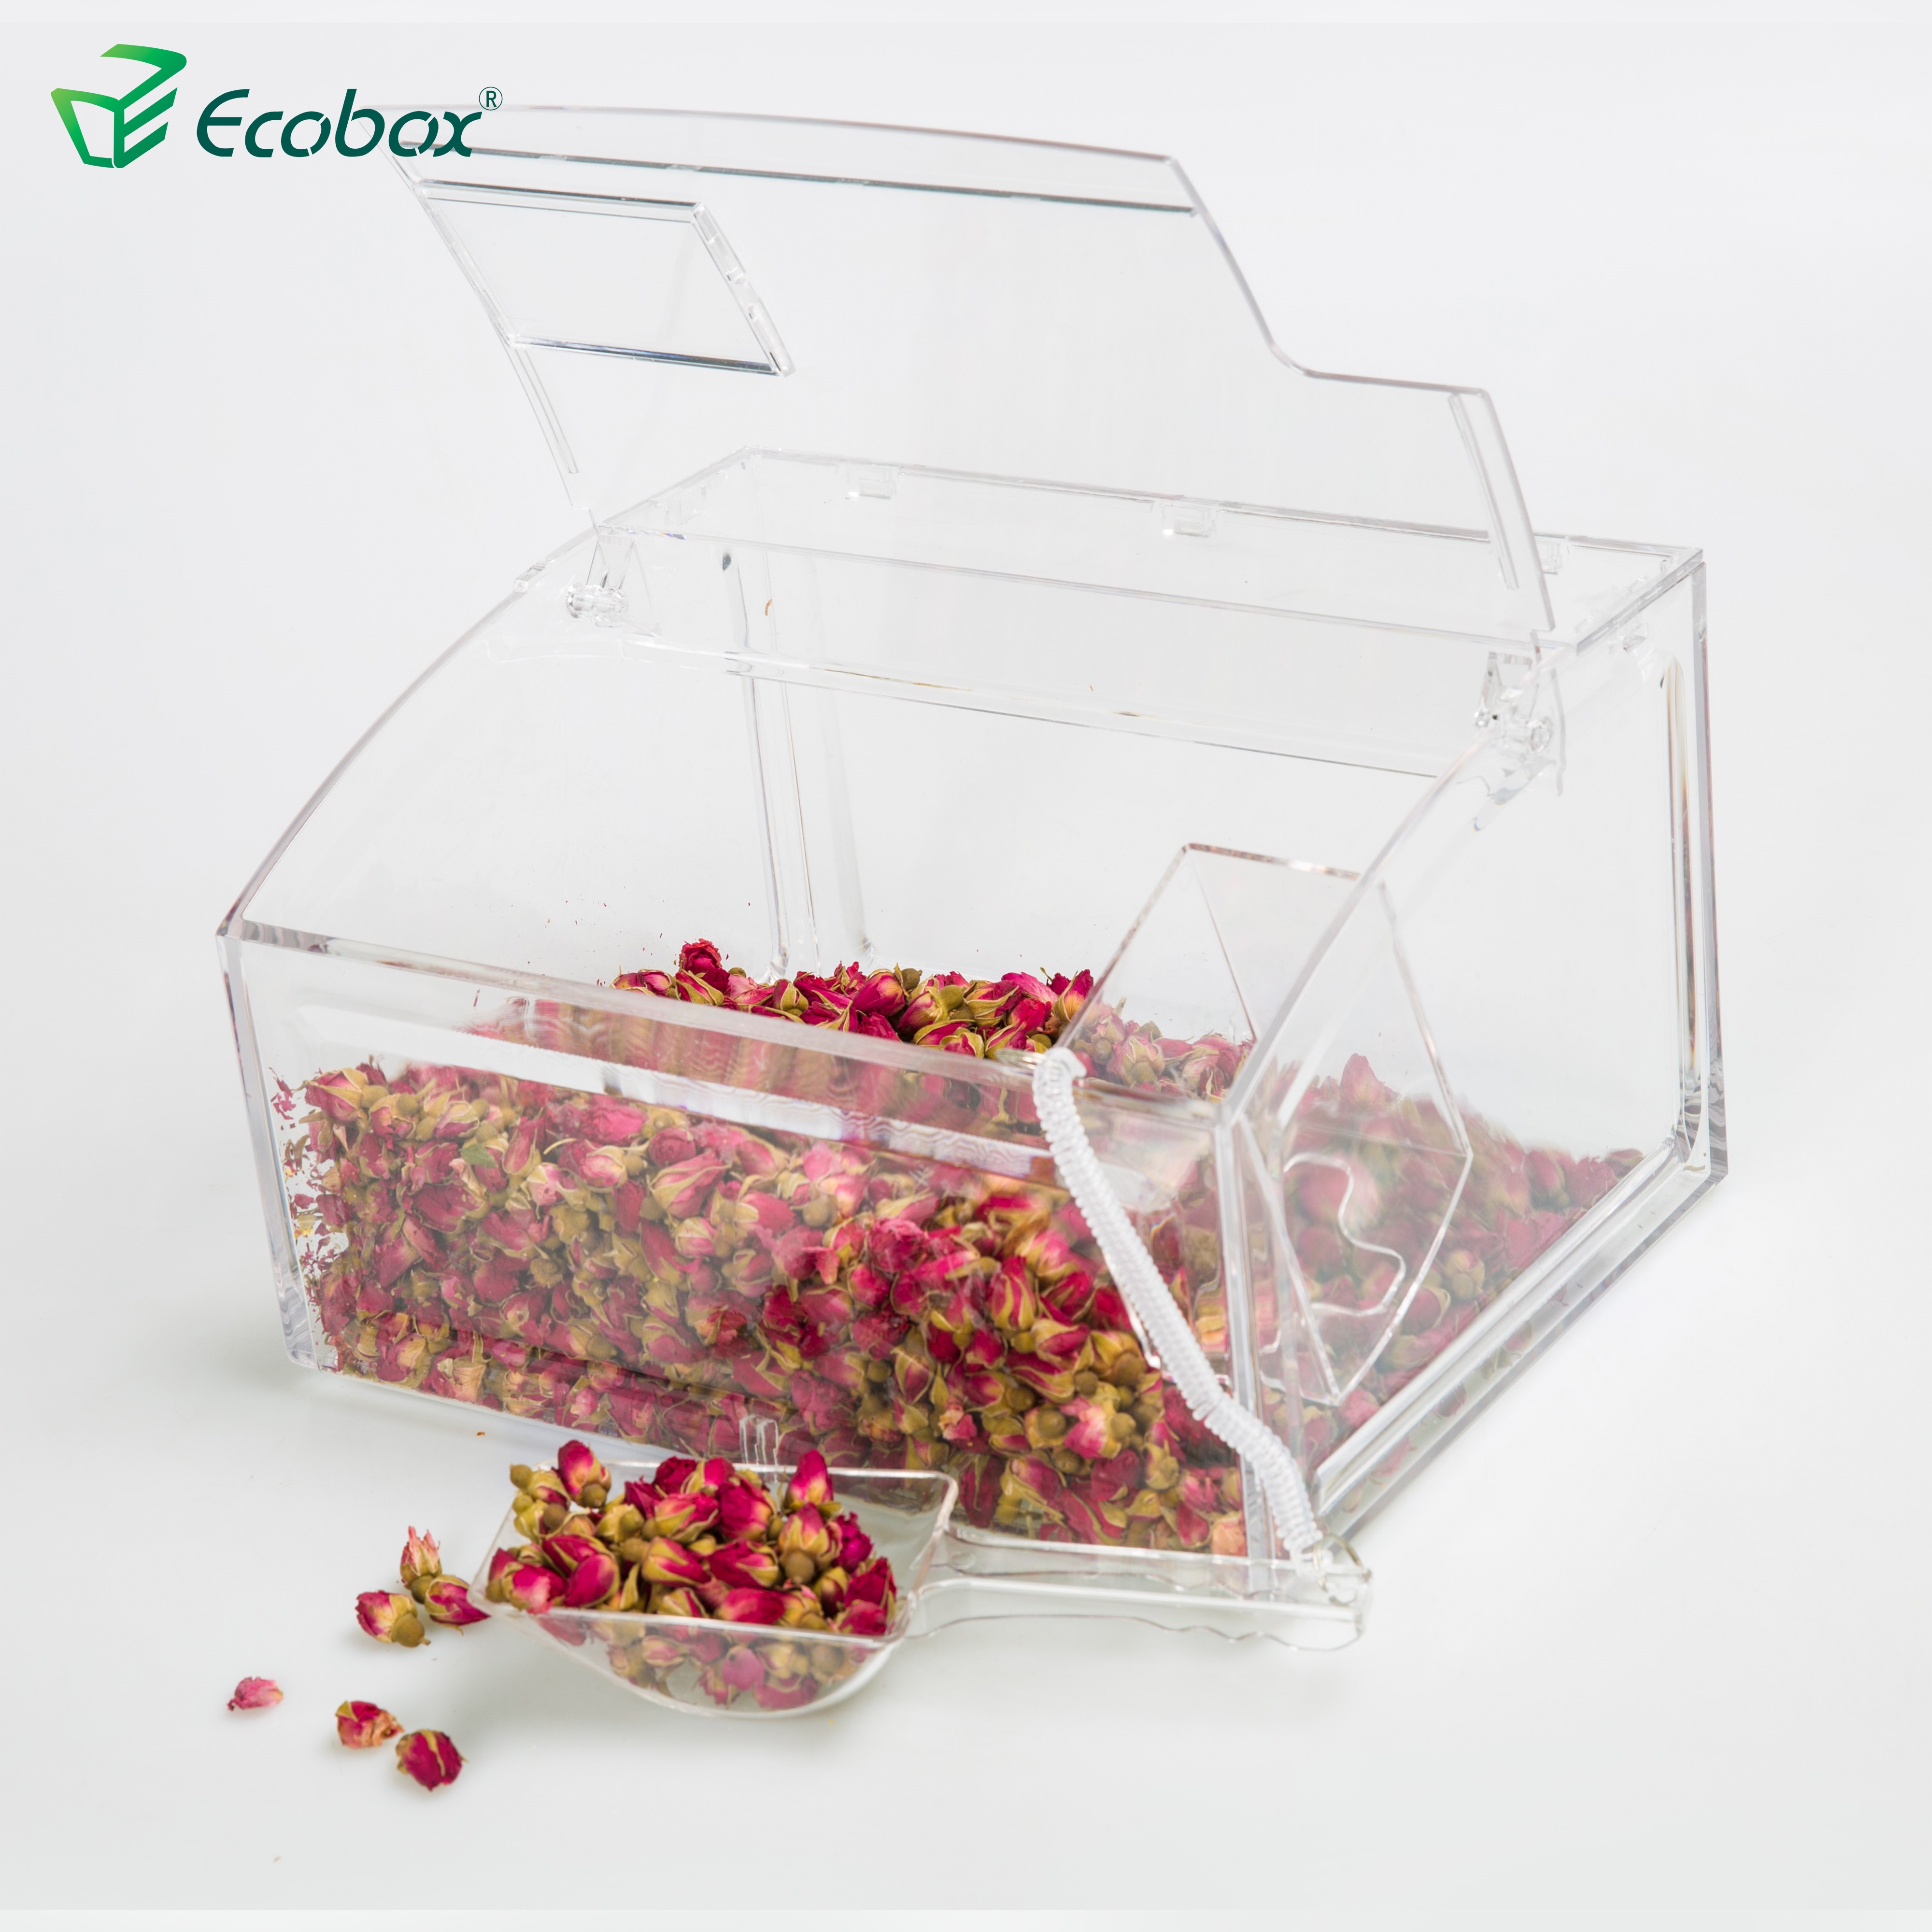 Ecobox Ecofriendly SPH-007 Supermarket bulk scoop bin for shop 